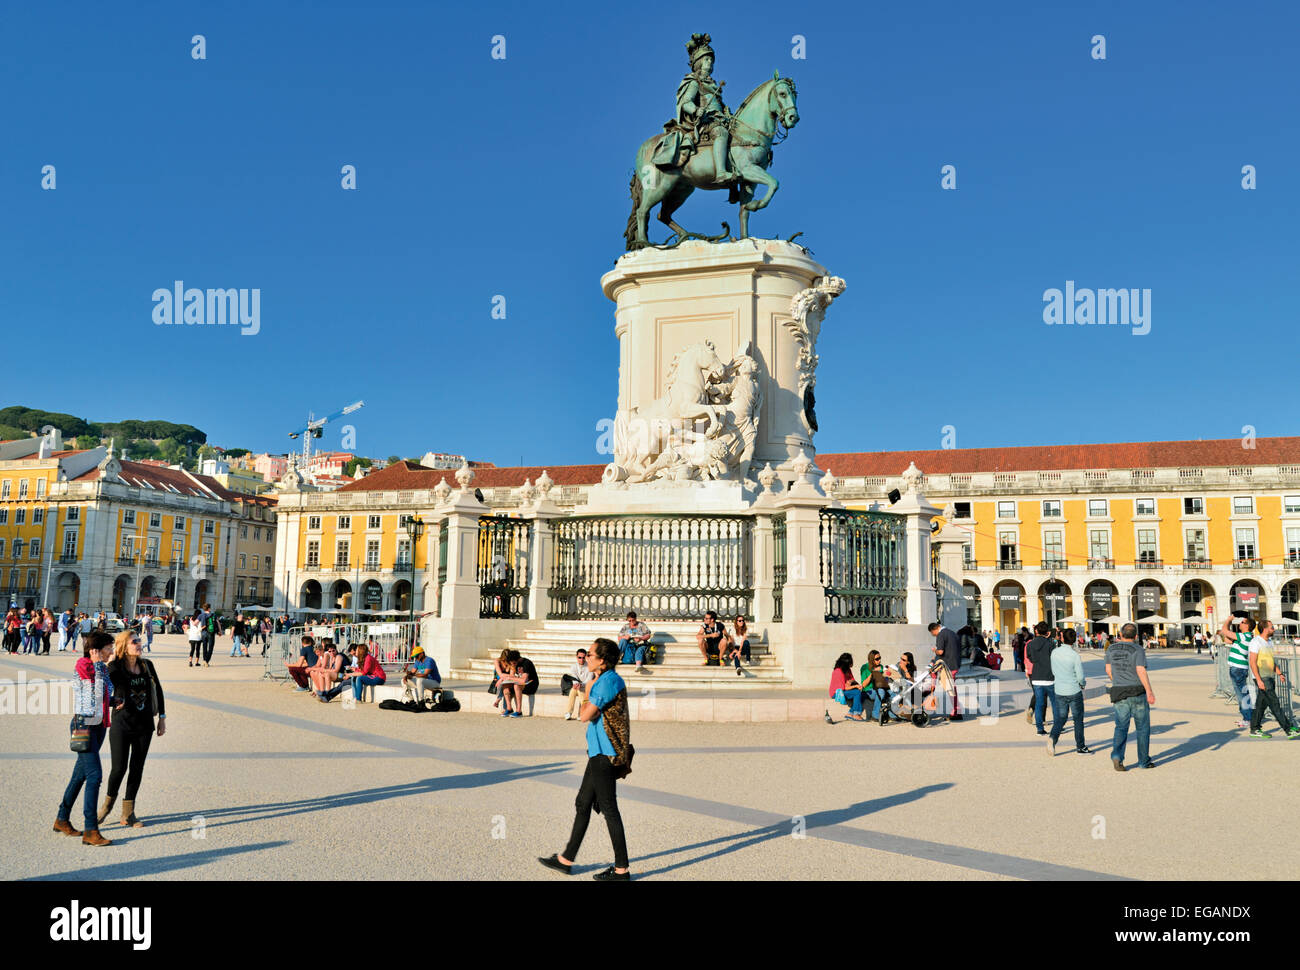 Portugal, Lisbon: People enjoying sun at the town square Praca do Comercio Stock Photo